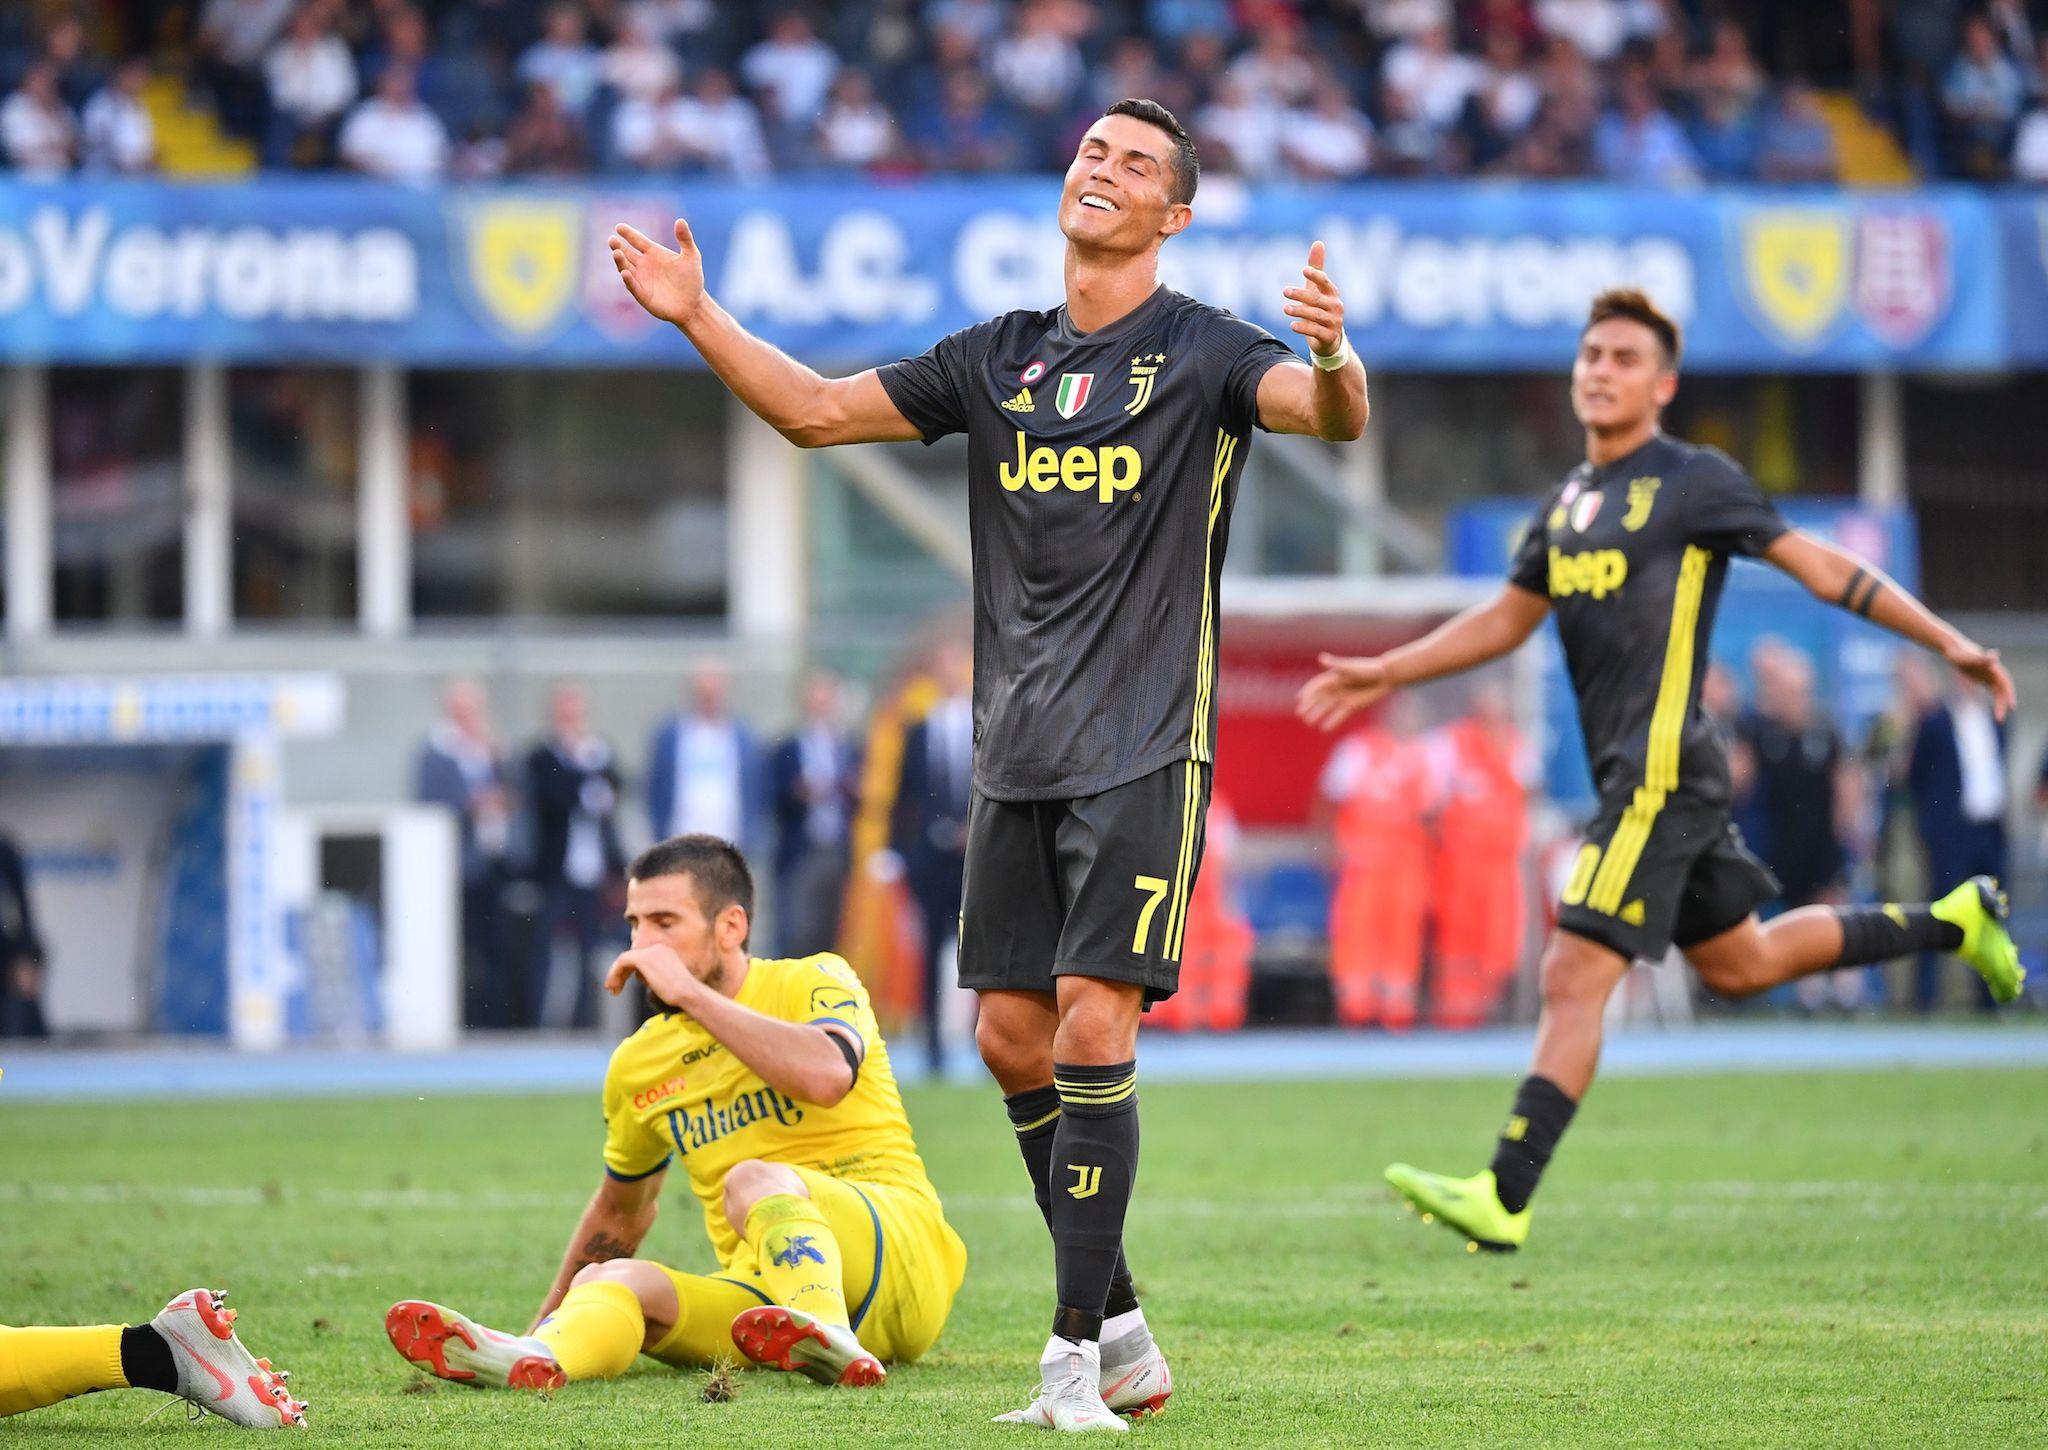 Juventus' Portuguese forward Cristiano Ronaldo reacts after missing a shot during the Italian Serie A football match AC Chievo vs Juventus at the Marcantonio-Bentegodi stadium in Verona on August 18, 2018